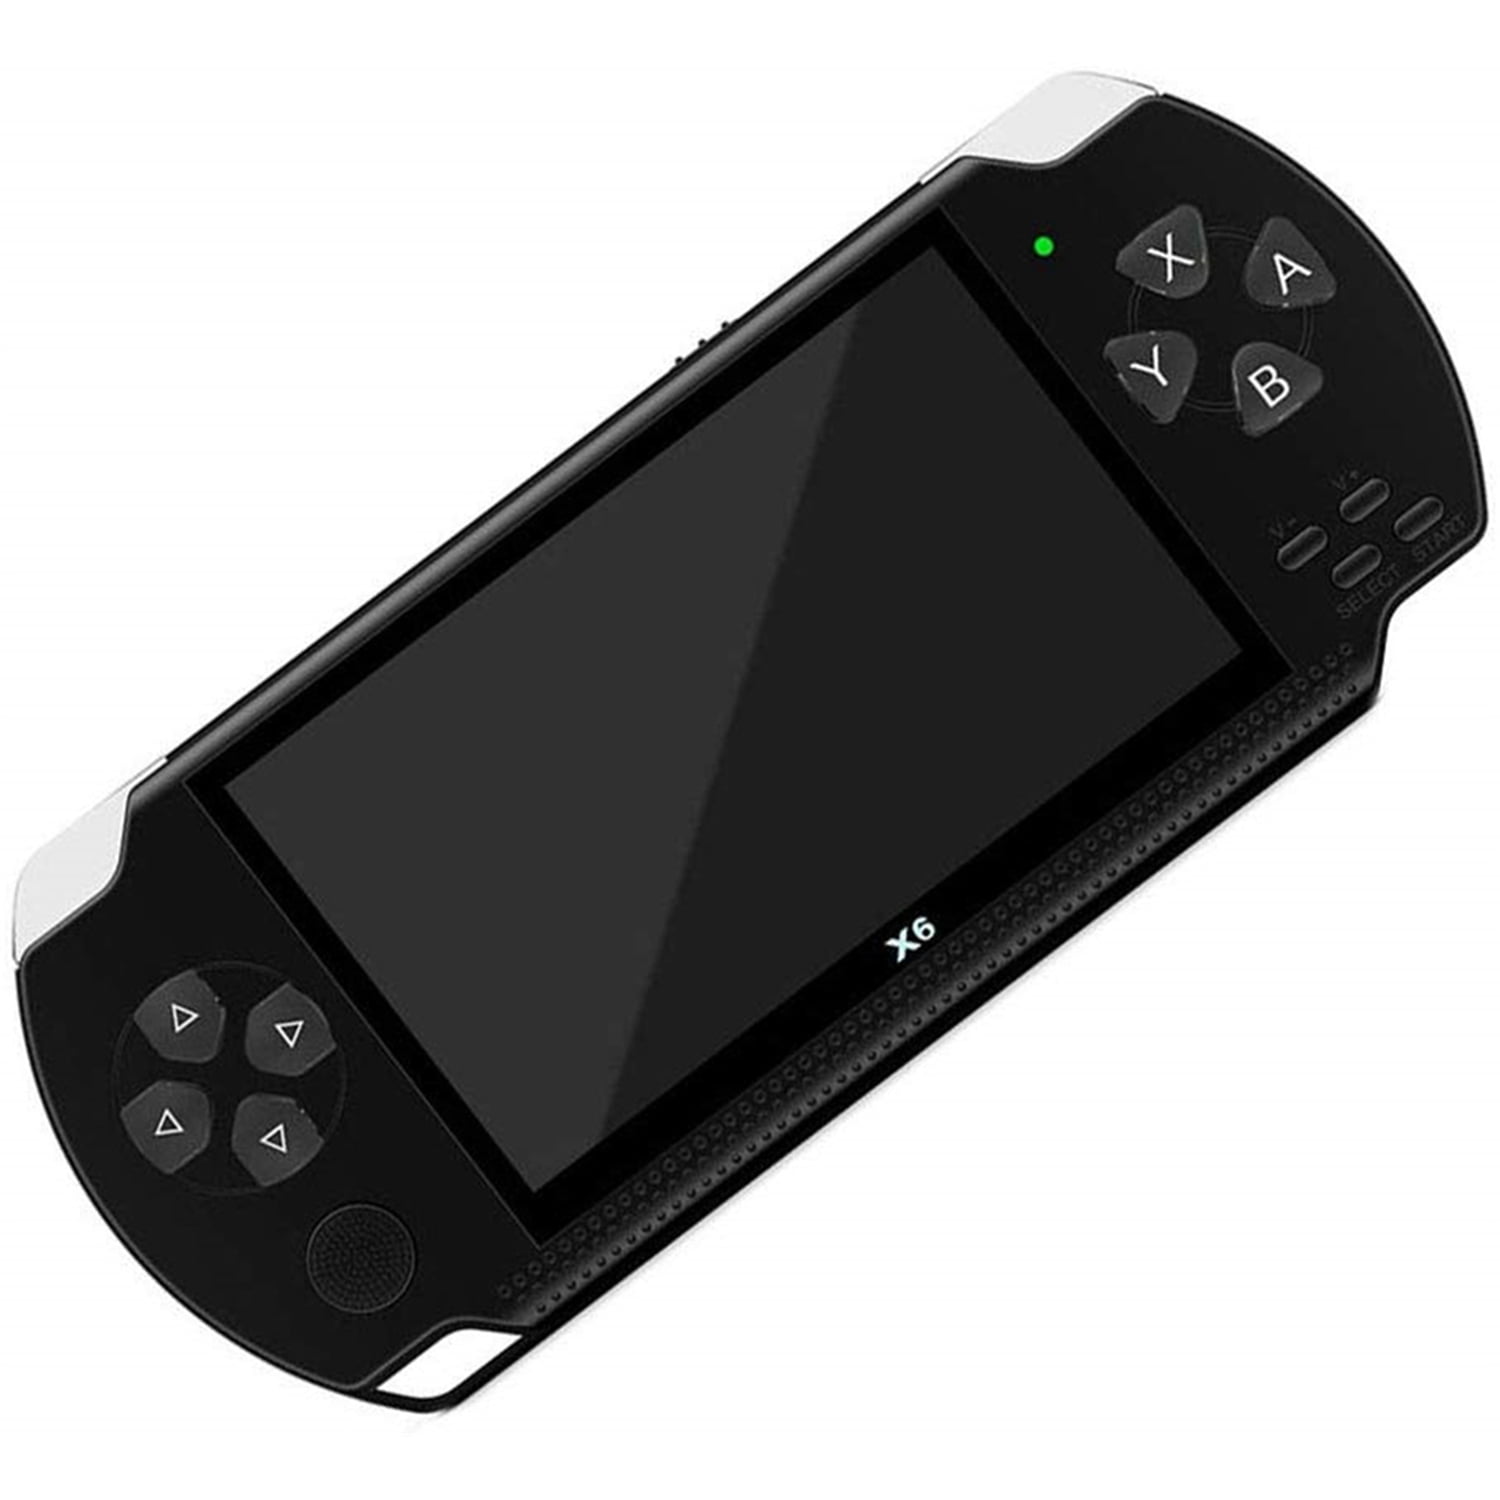 Slik Marquee bånd KLZO PSP Handheld Game Machine X6 Updated Version, 8GB , 4 inch High  Definition Color Screen, Over 3000 Free Games-Black - Walmart.com